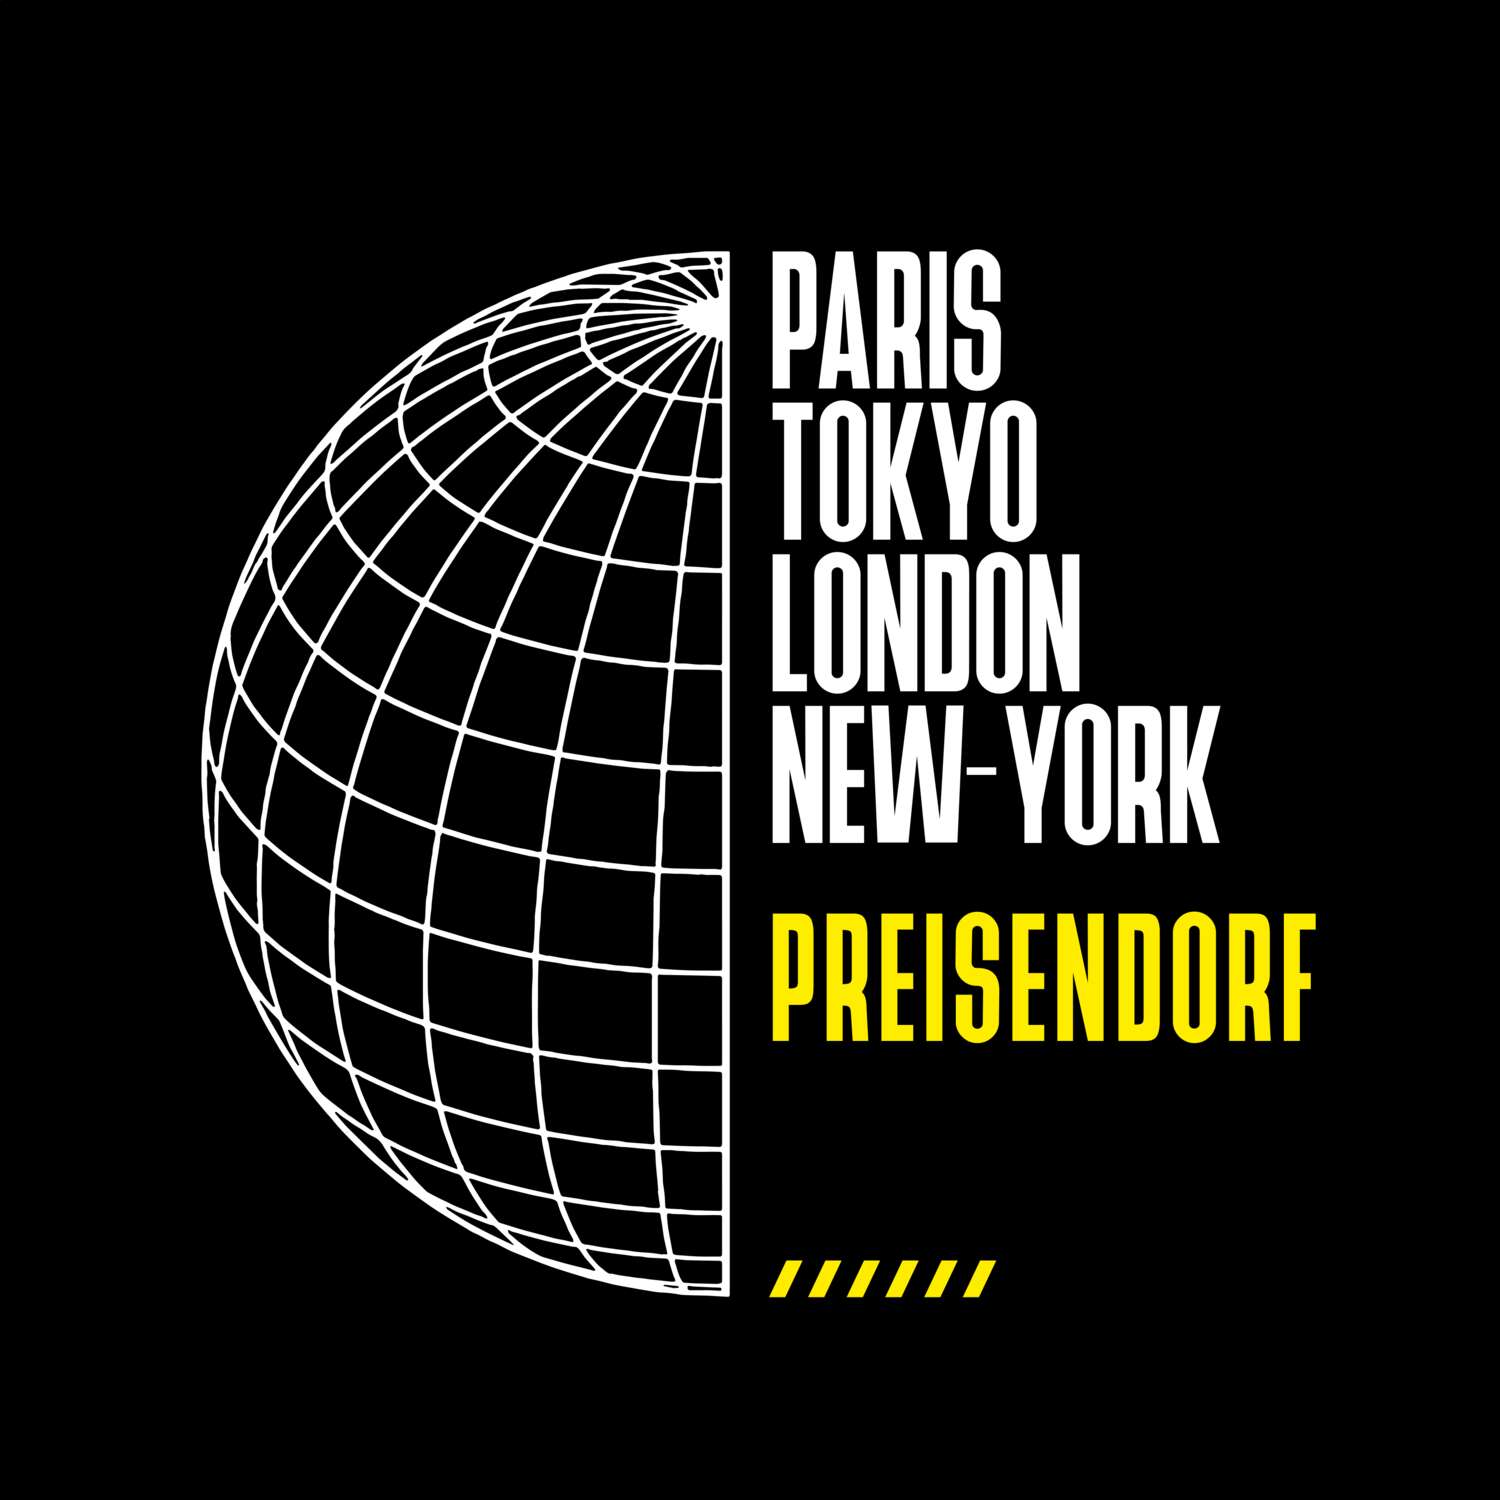 Preisendorf T-Shirt »Paris Tokyo London«